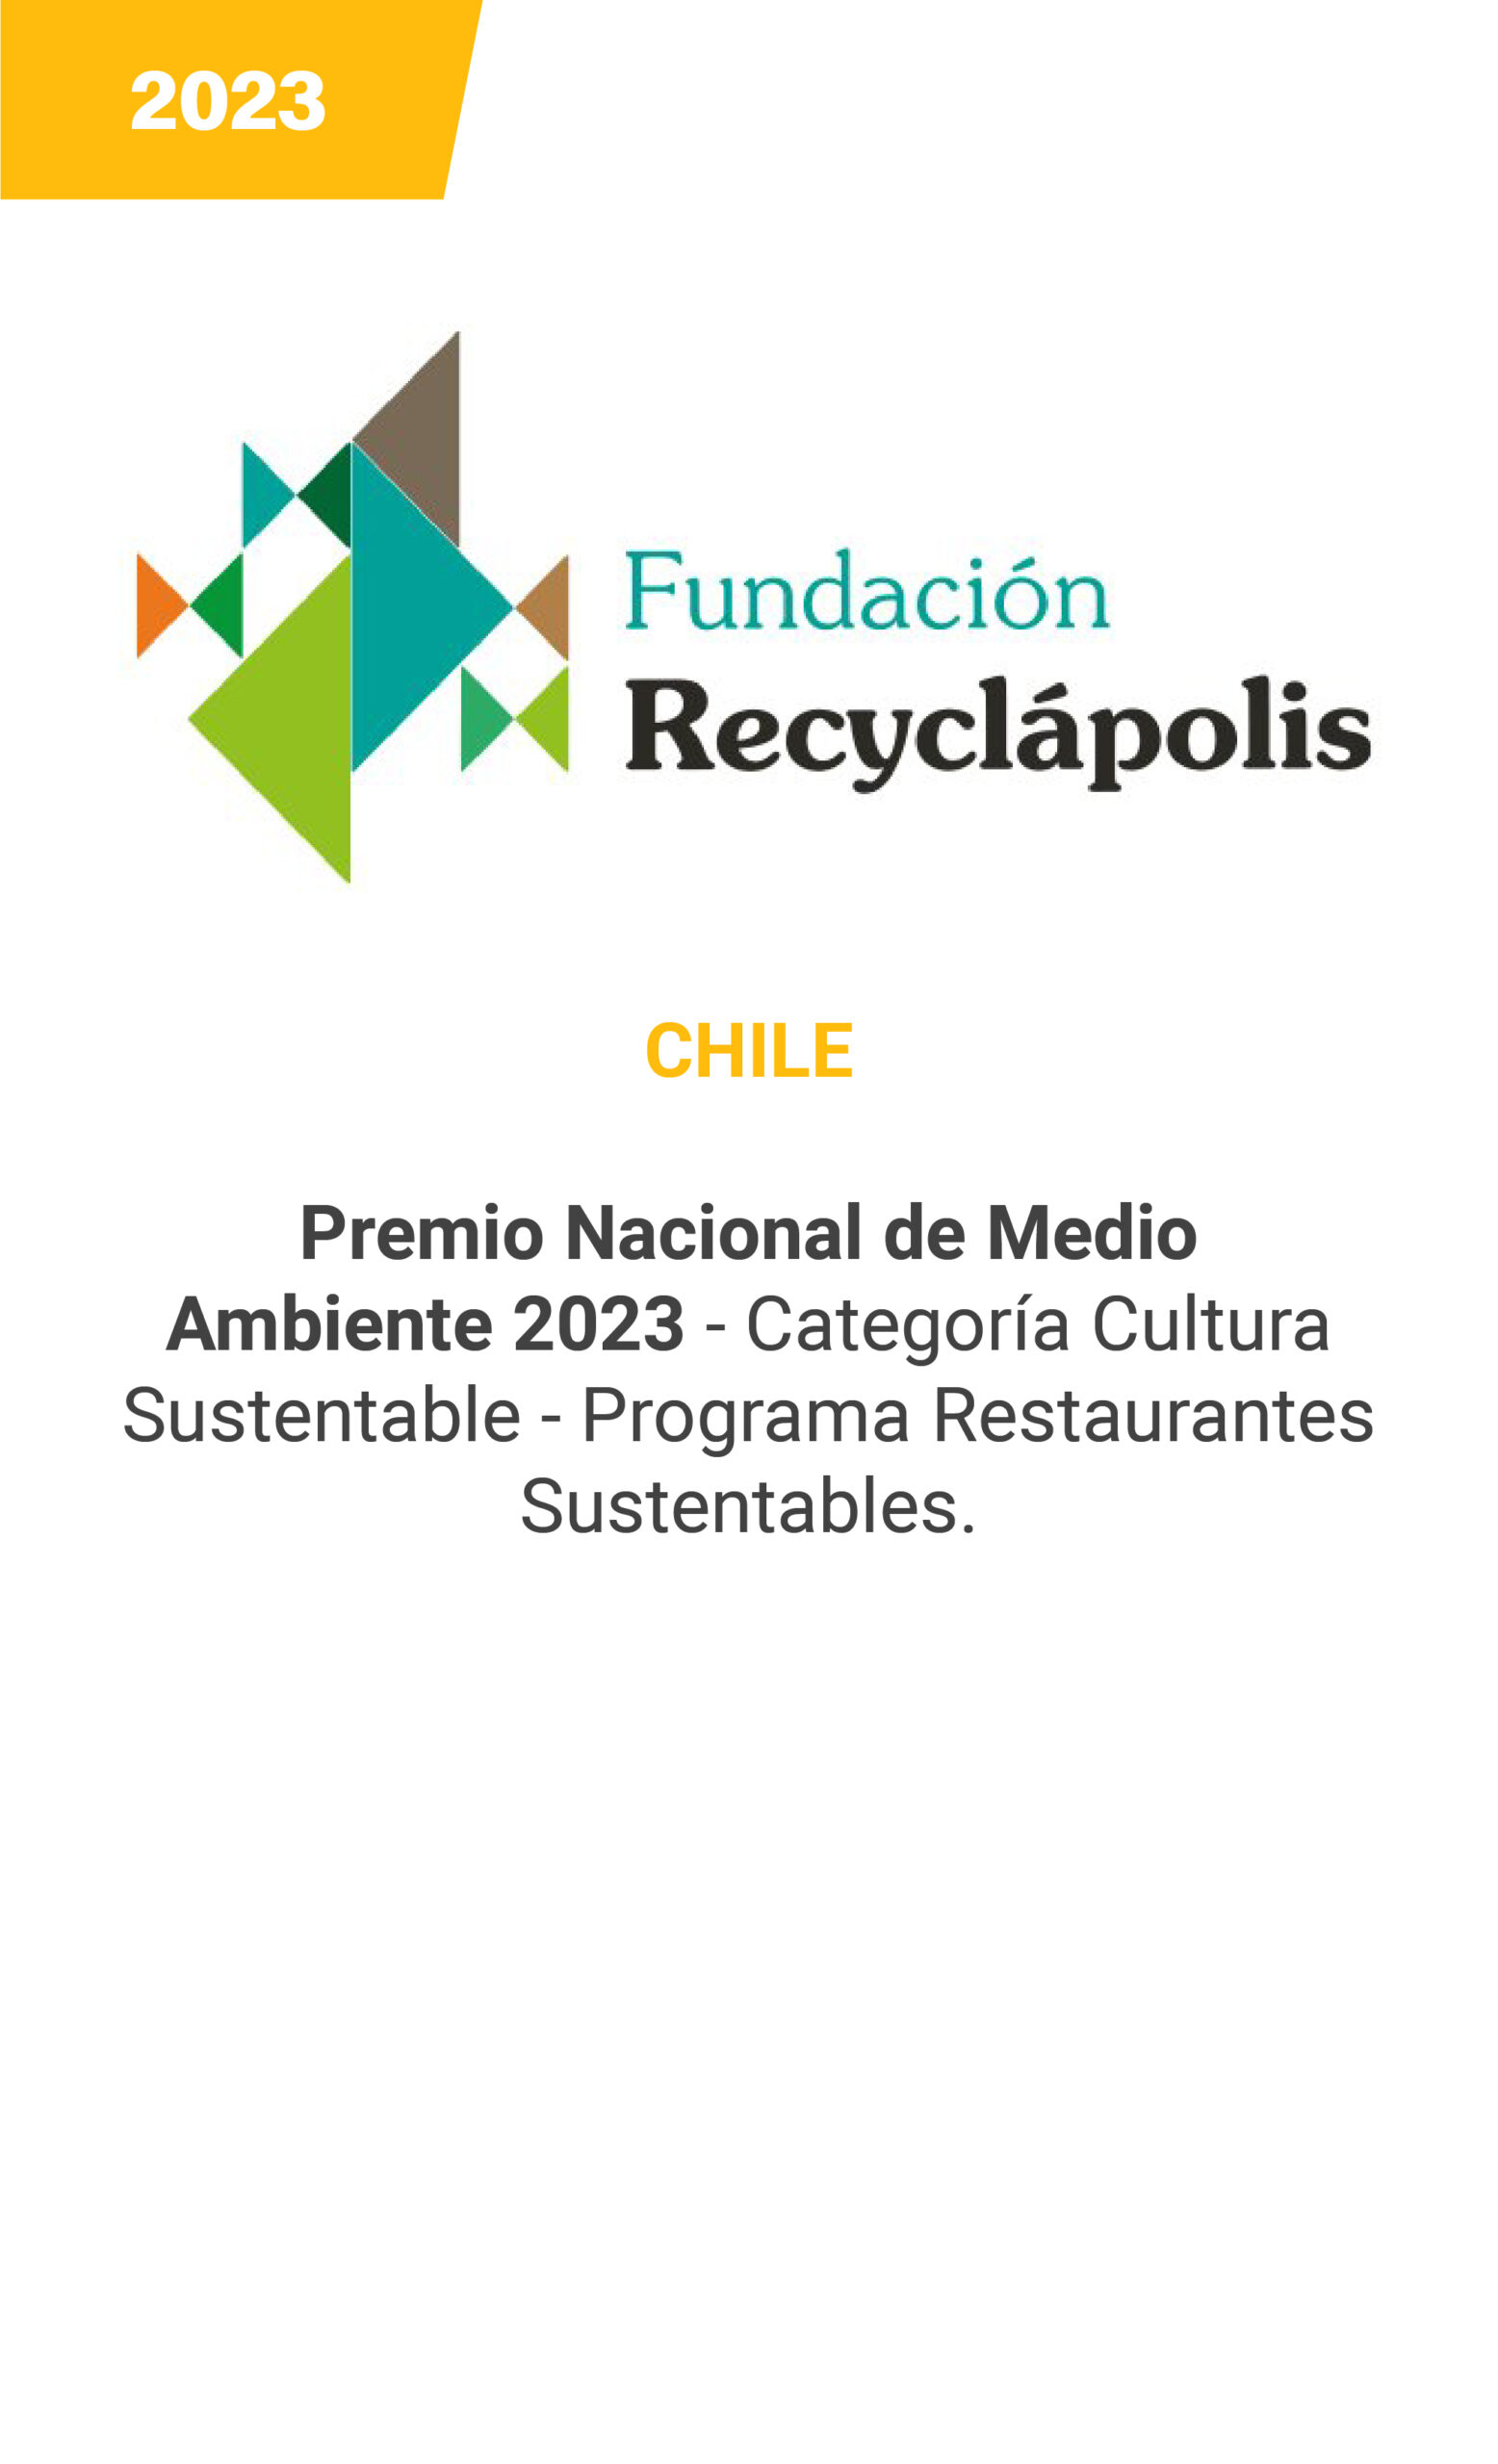 Fundacion Recyclapolis - 2023 - mobile